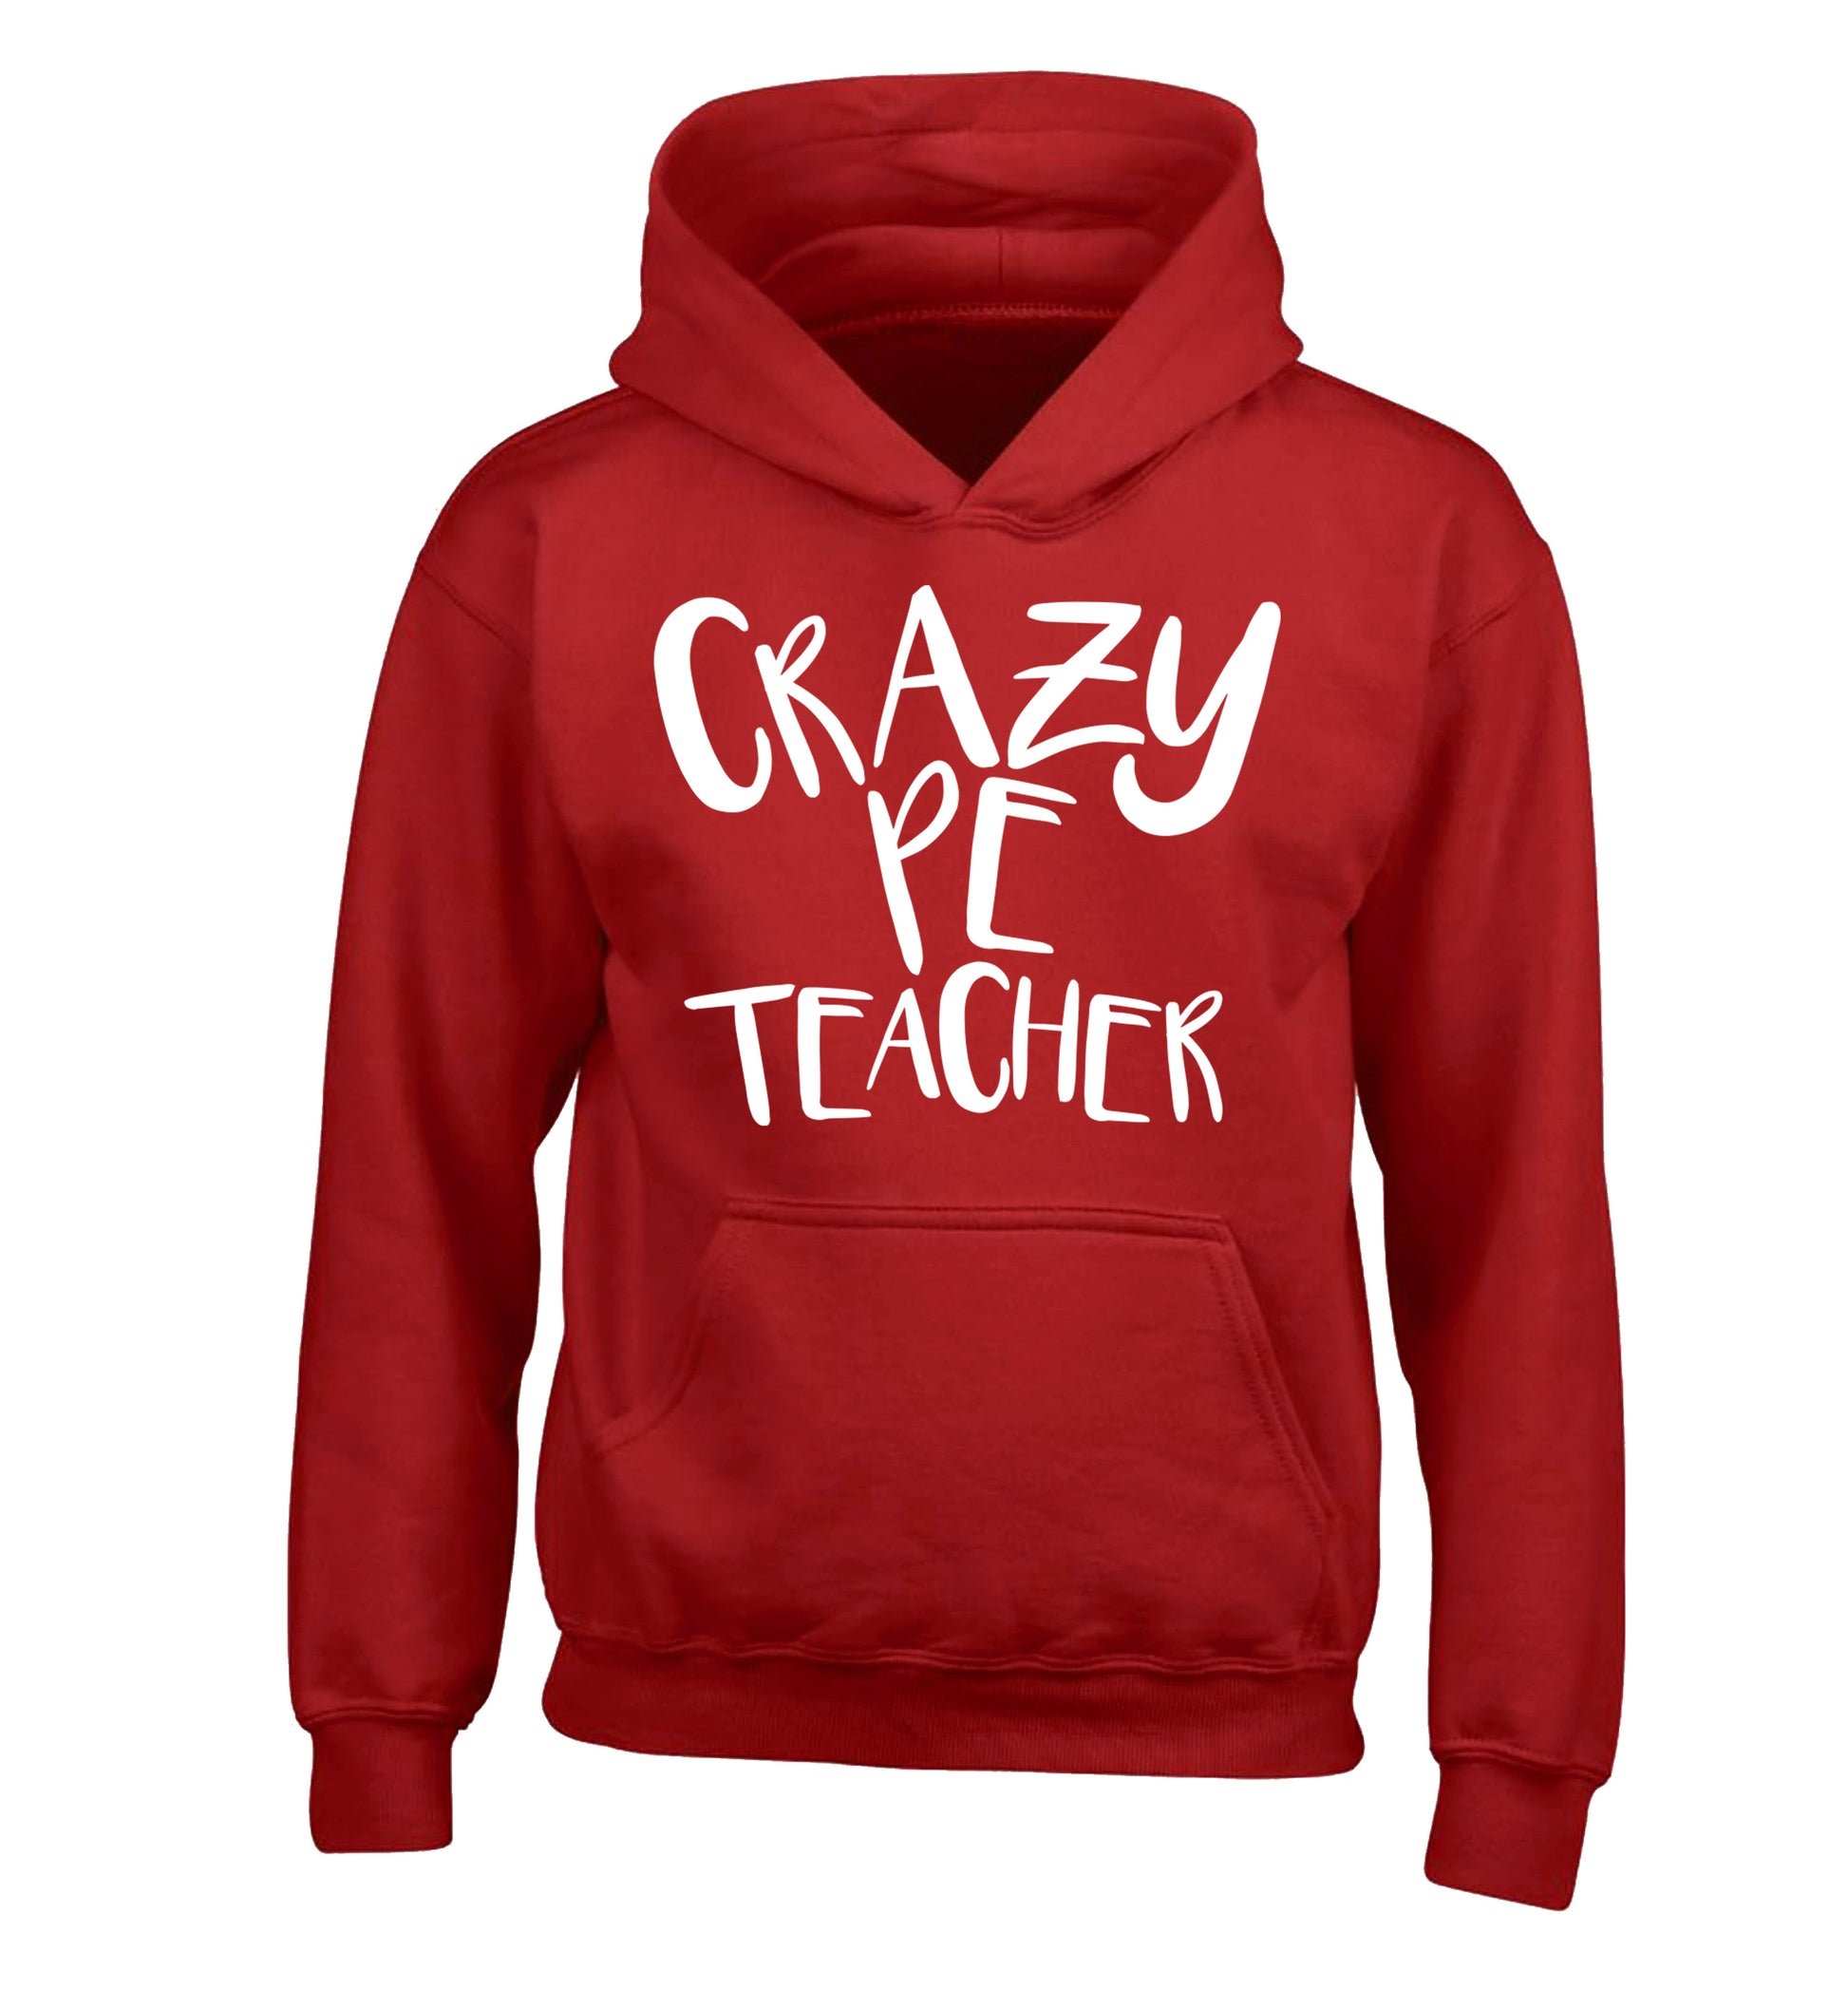 Crazy PE teacher children's red hoodie 12-13 Years